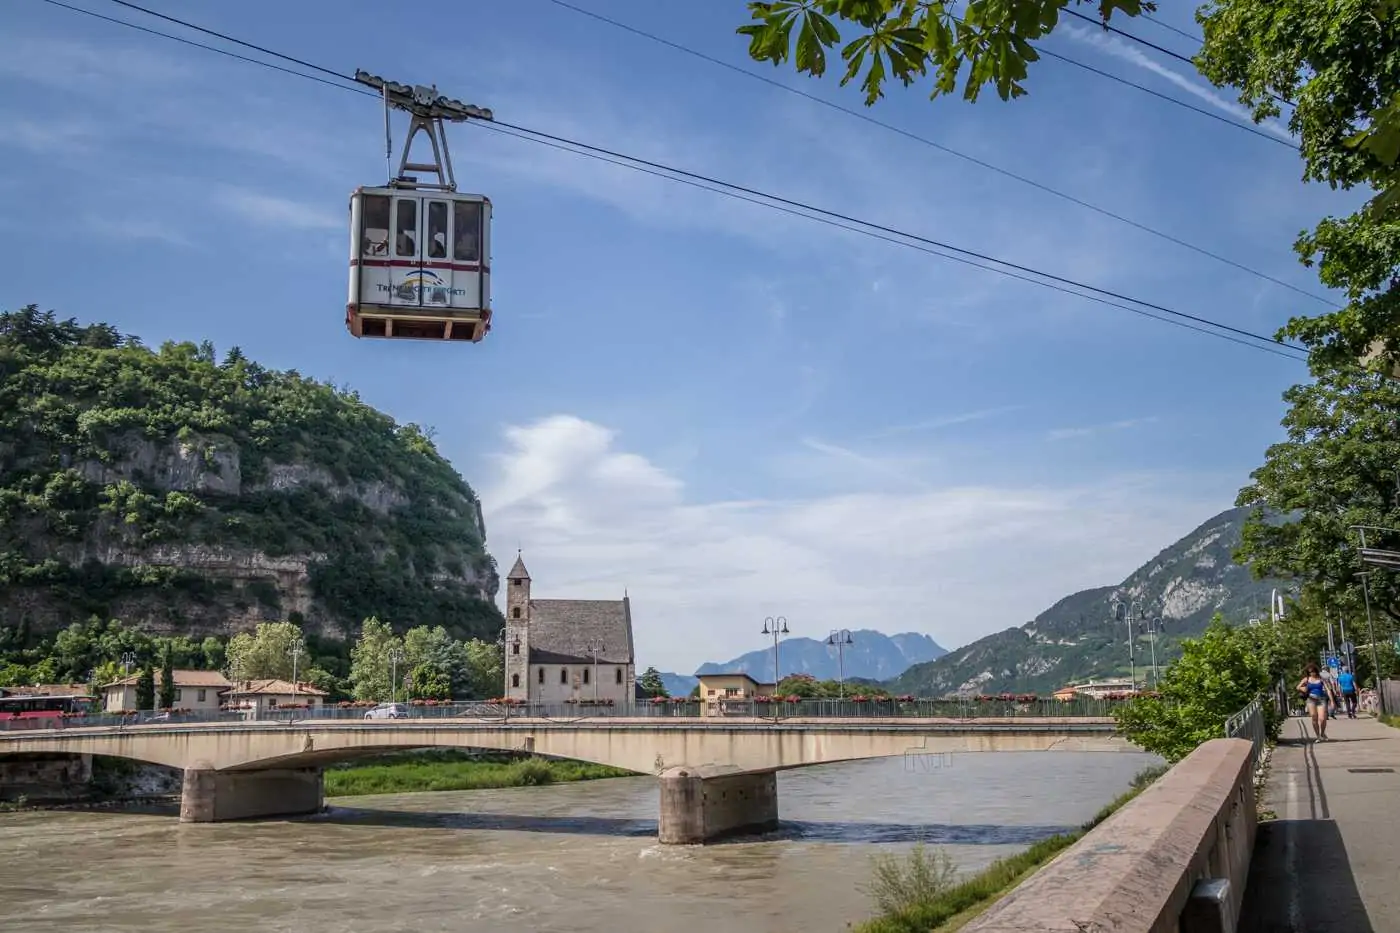 cable car from trento to sardagna